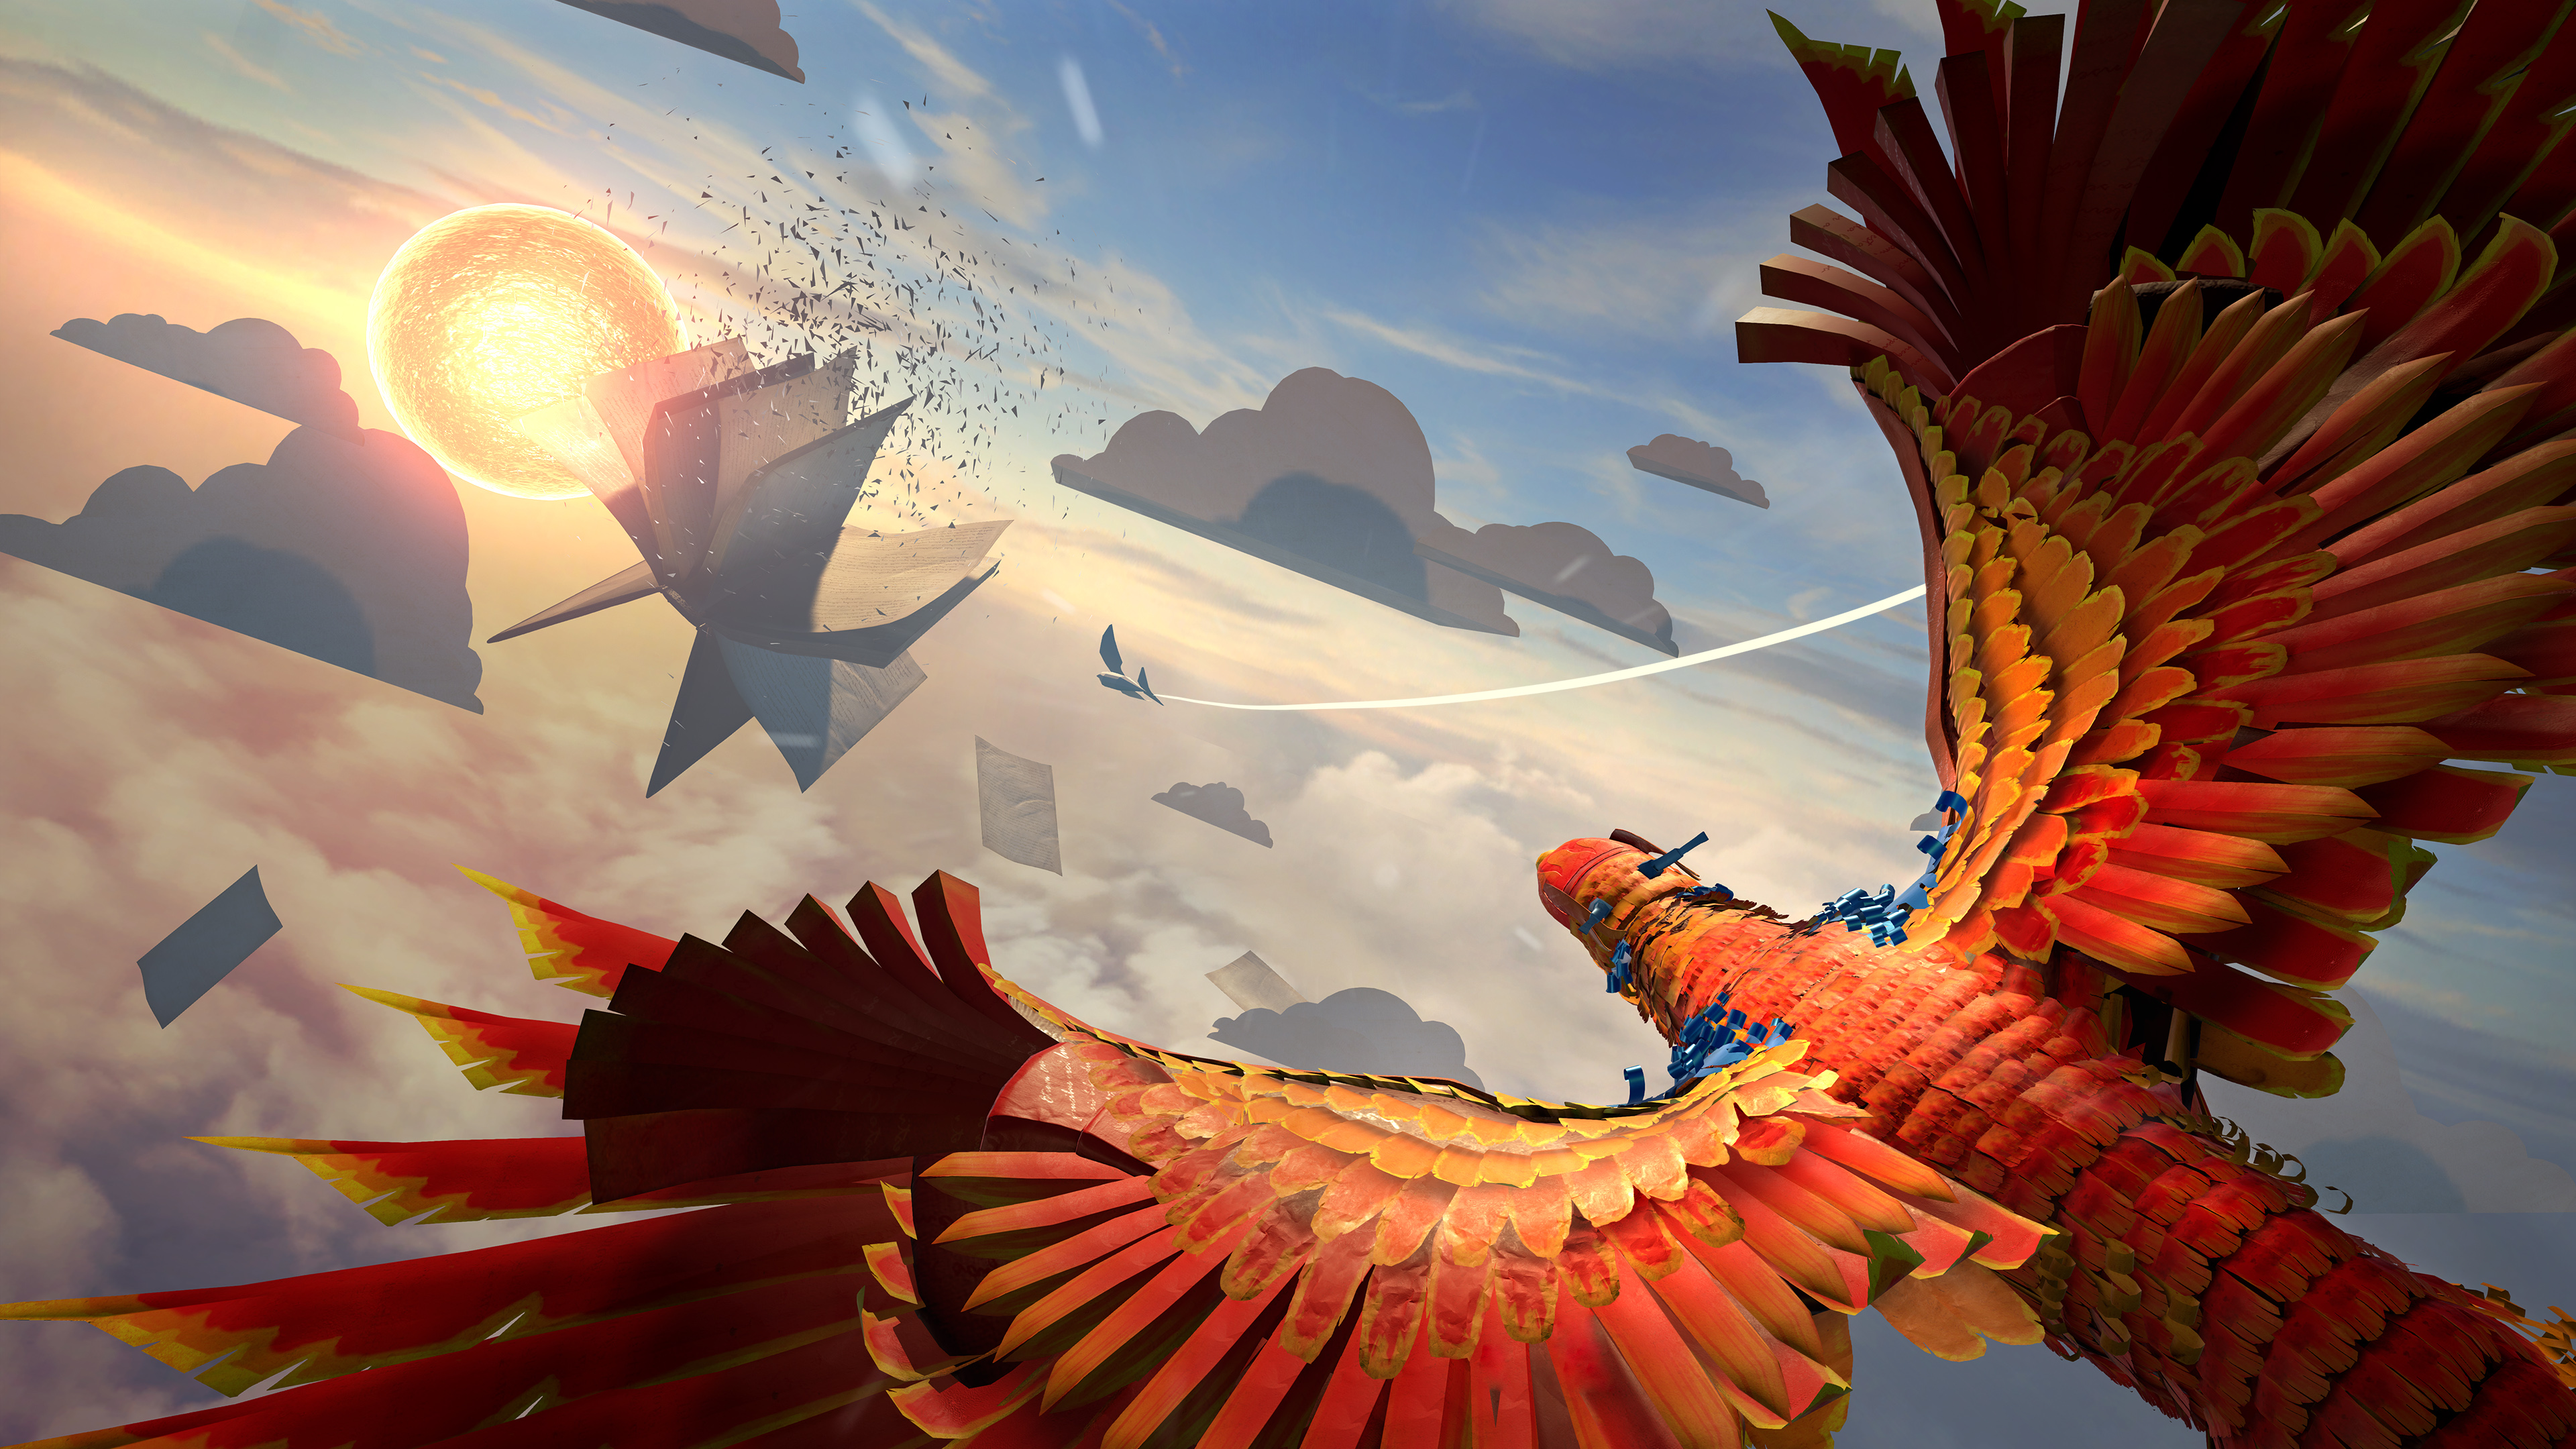 gaming wallpaper,sky,cg artwork,dragon,illustration,fictional character